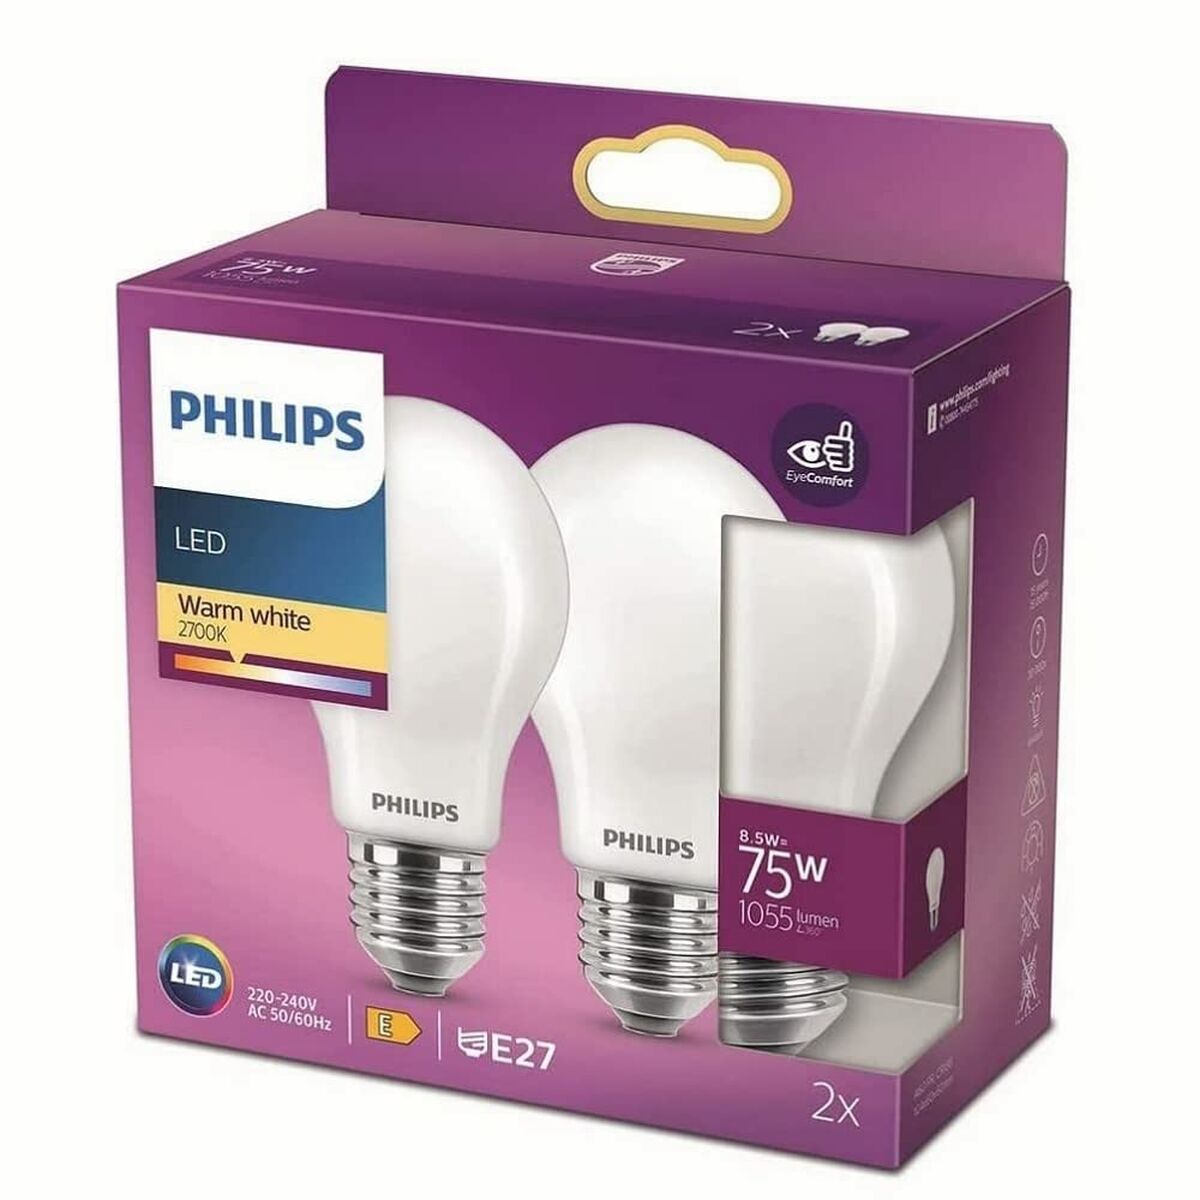 LED lamp Philips (Refurbished A+)